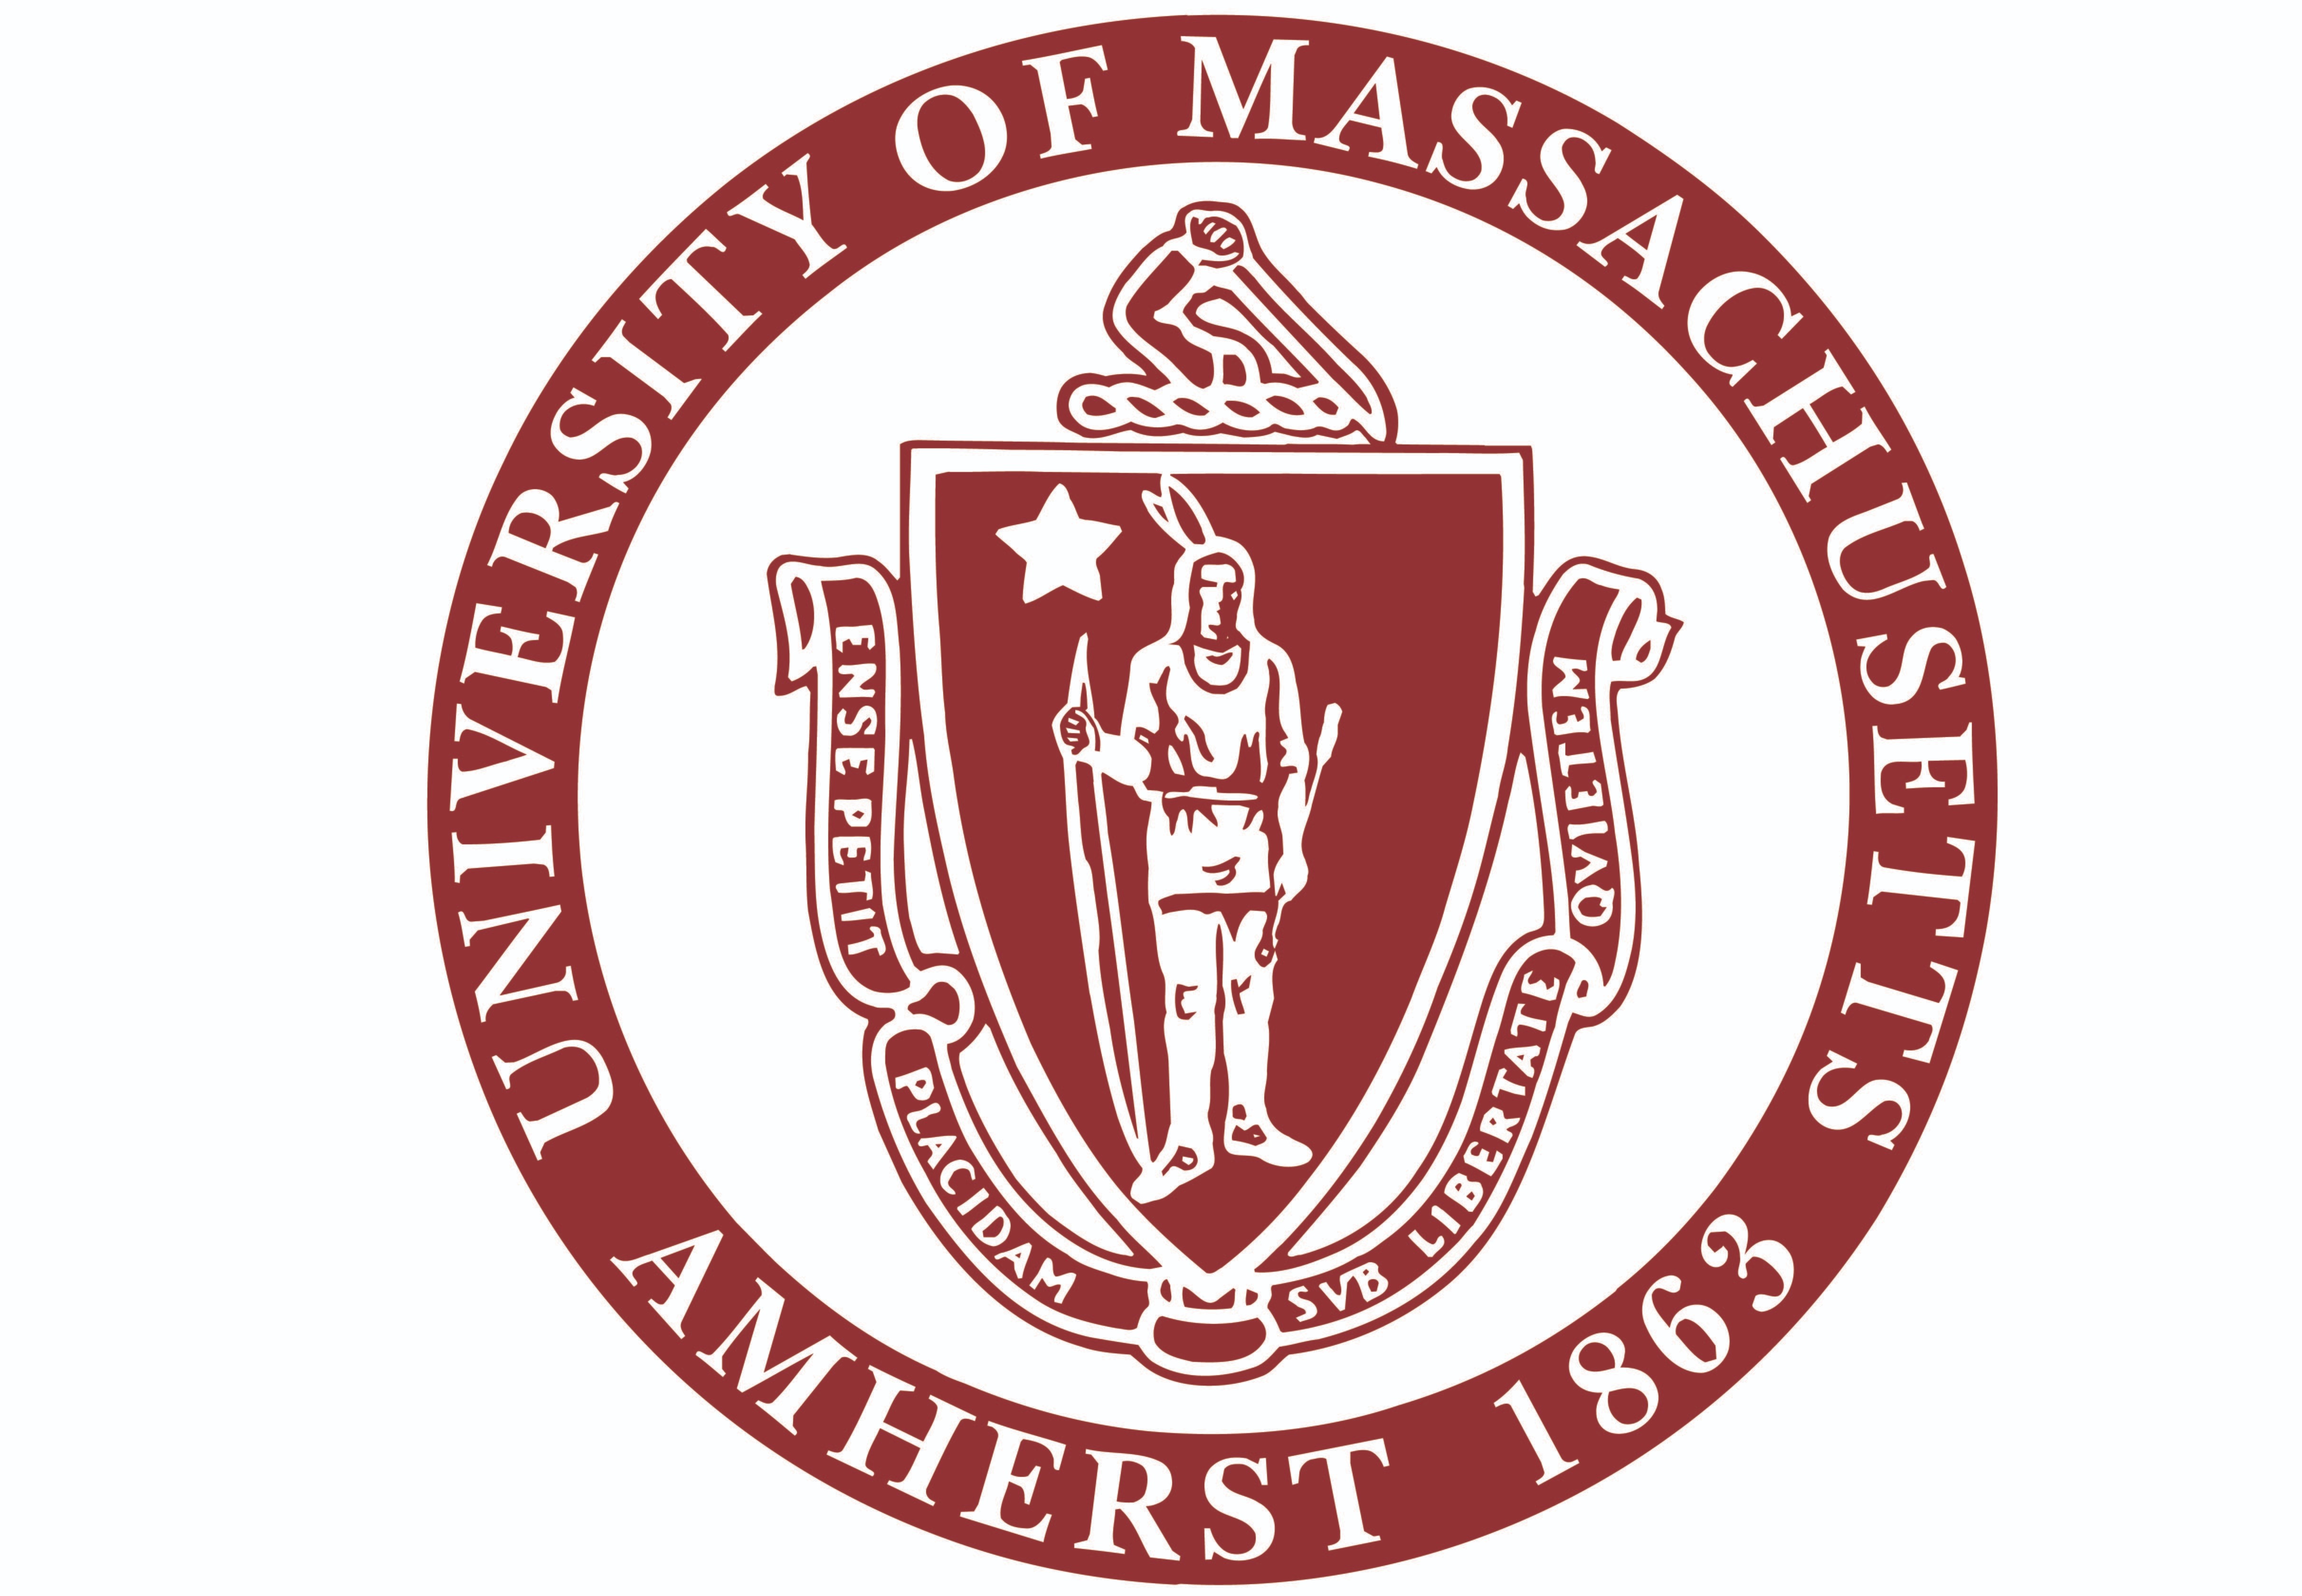 University_of_Massachusetts